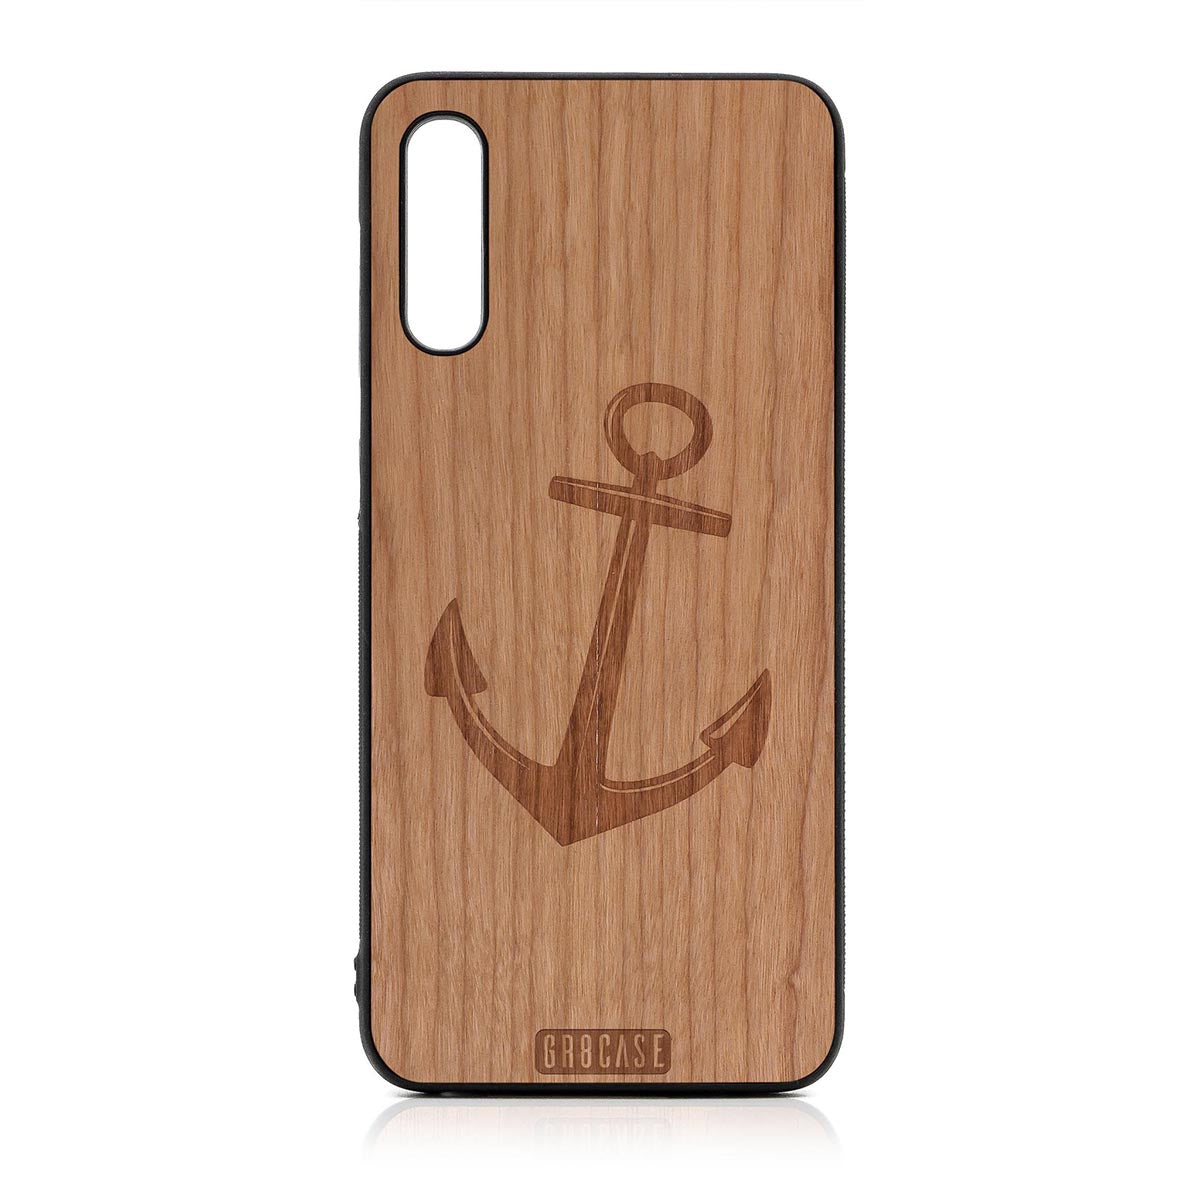 Anchor Design Wood Case For Samsung Galaxy A50 by GR8CASE